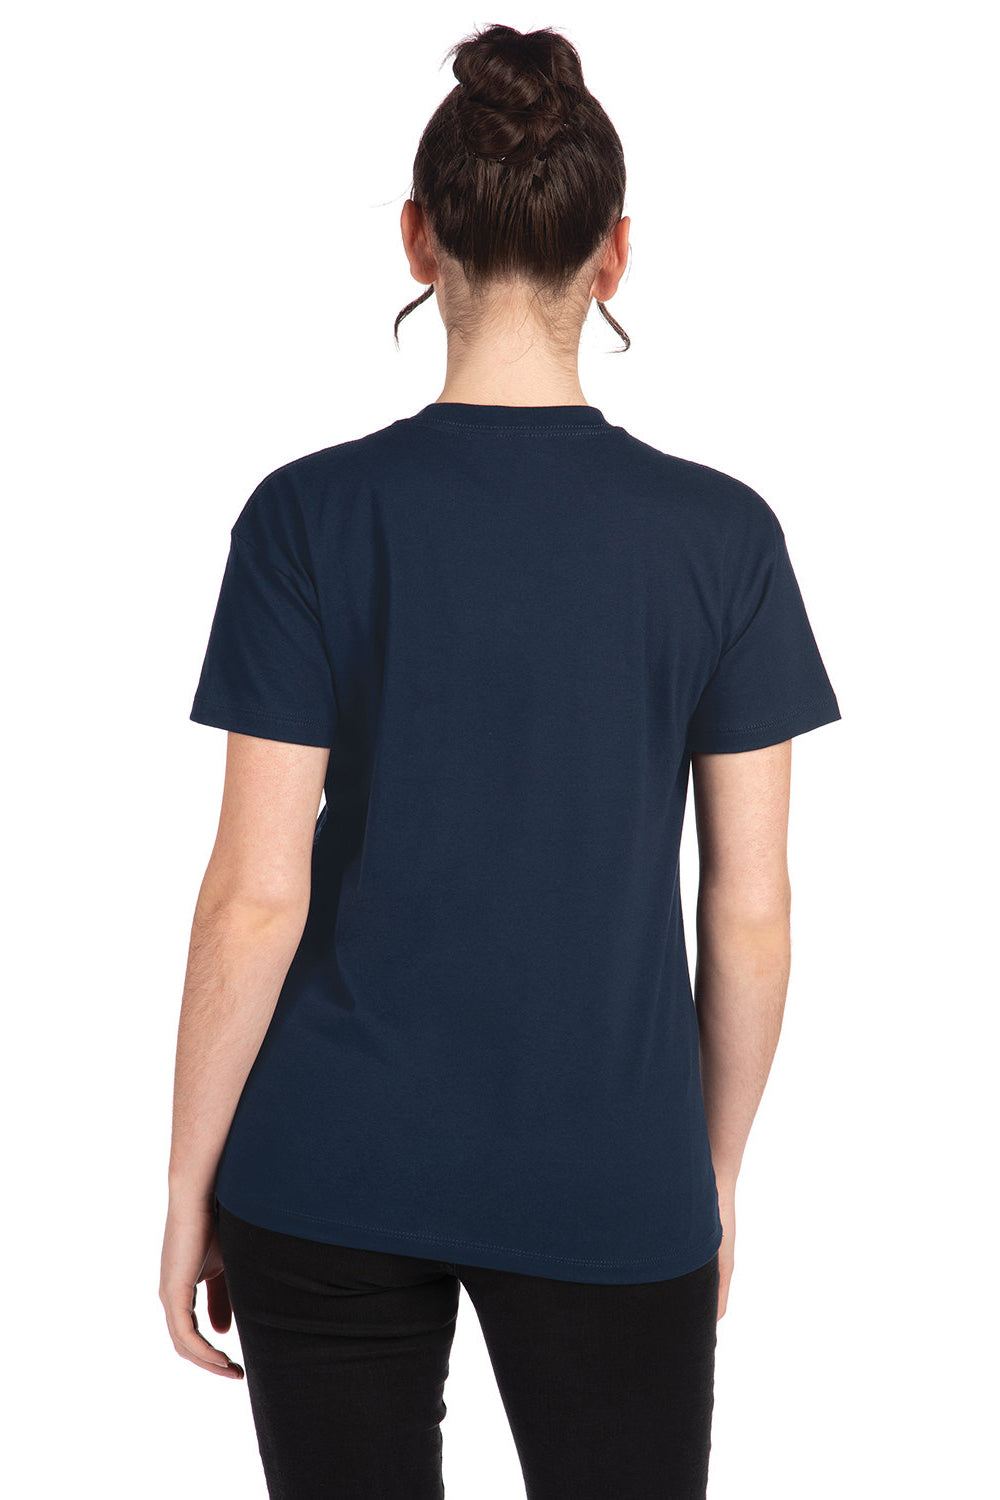 Next Level 3910NL Womens Relaxed Short Sleeve Crewneck T-Shirt Midnight Navy Blue Back